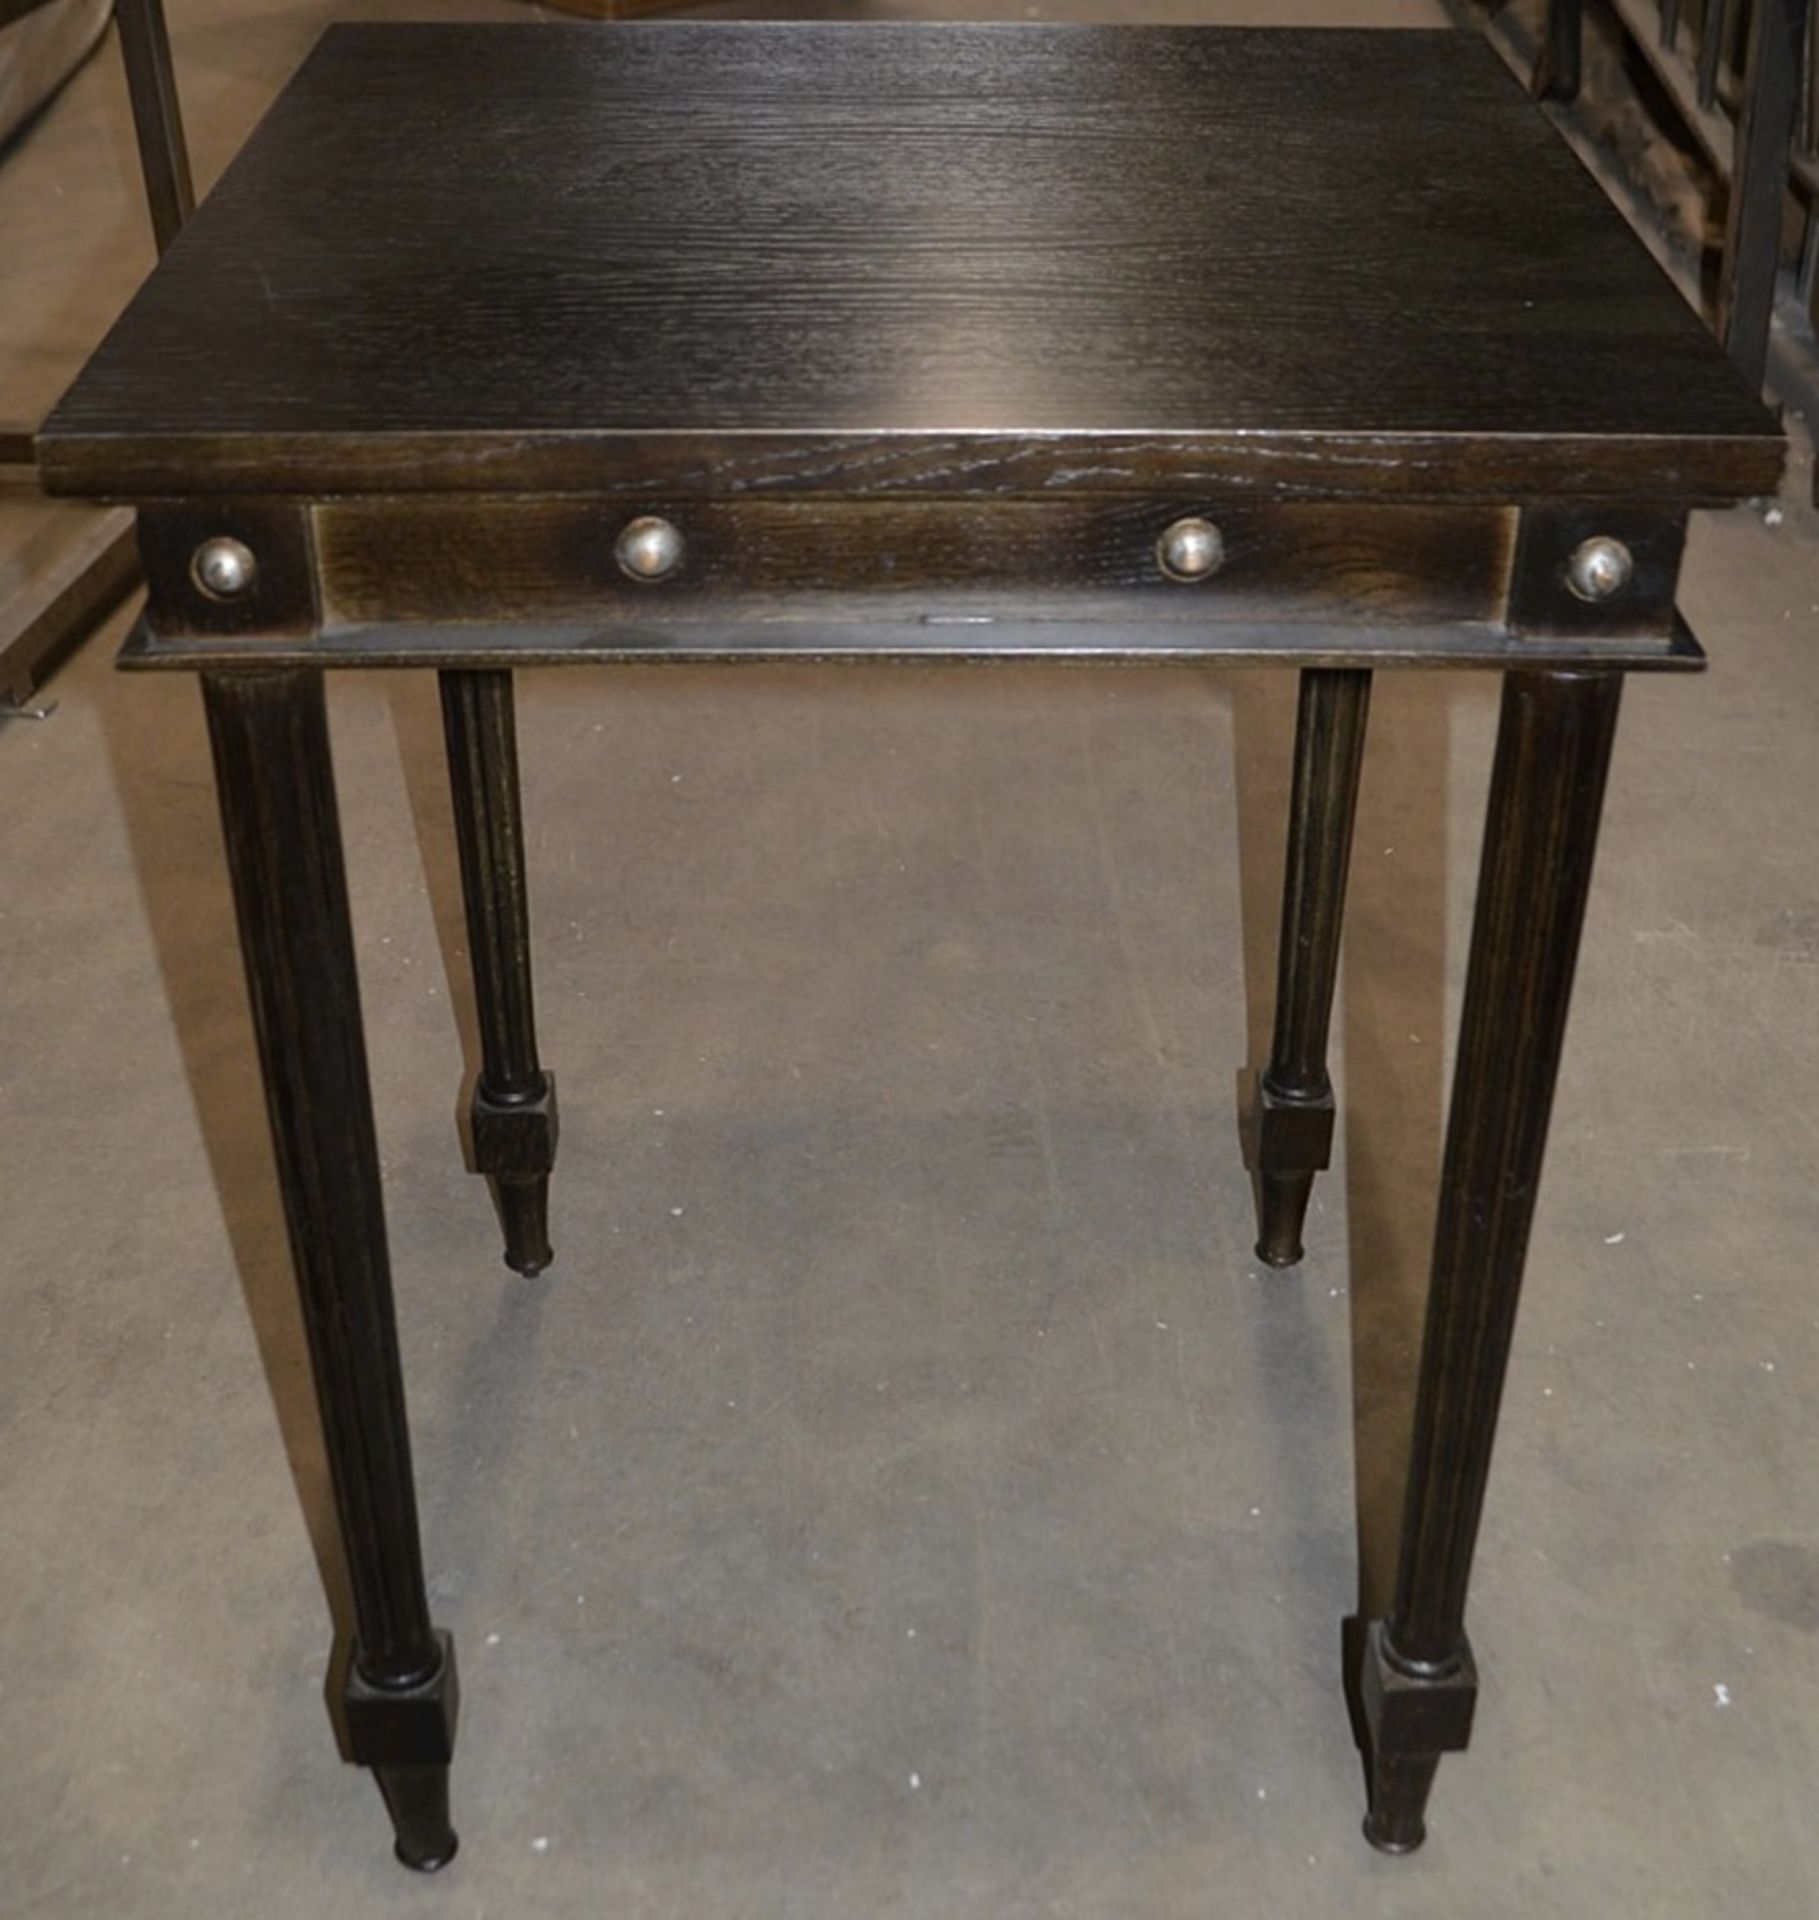 1 x JUSTIN VAN BREDA 'Thomas' Tall Side Table With A Dark Oak Finish - Dimensions: W50 x D50 x H65cm - Image 4 of 5